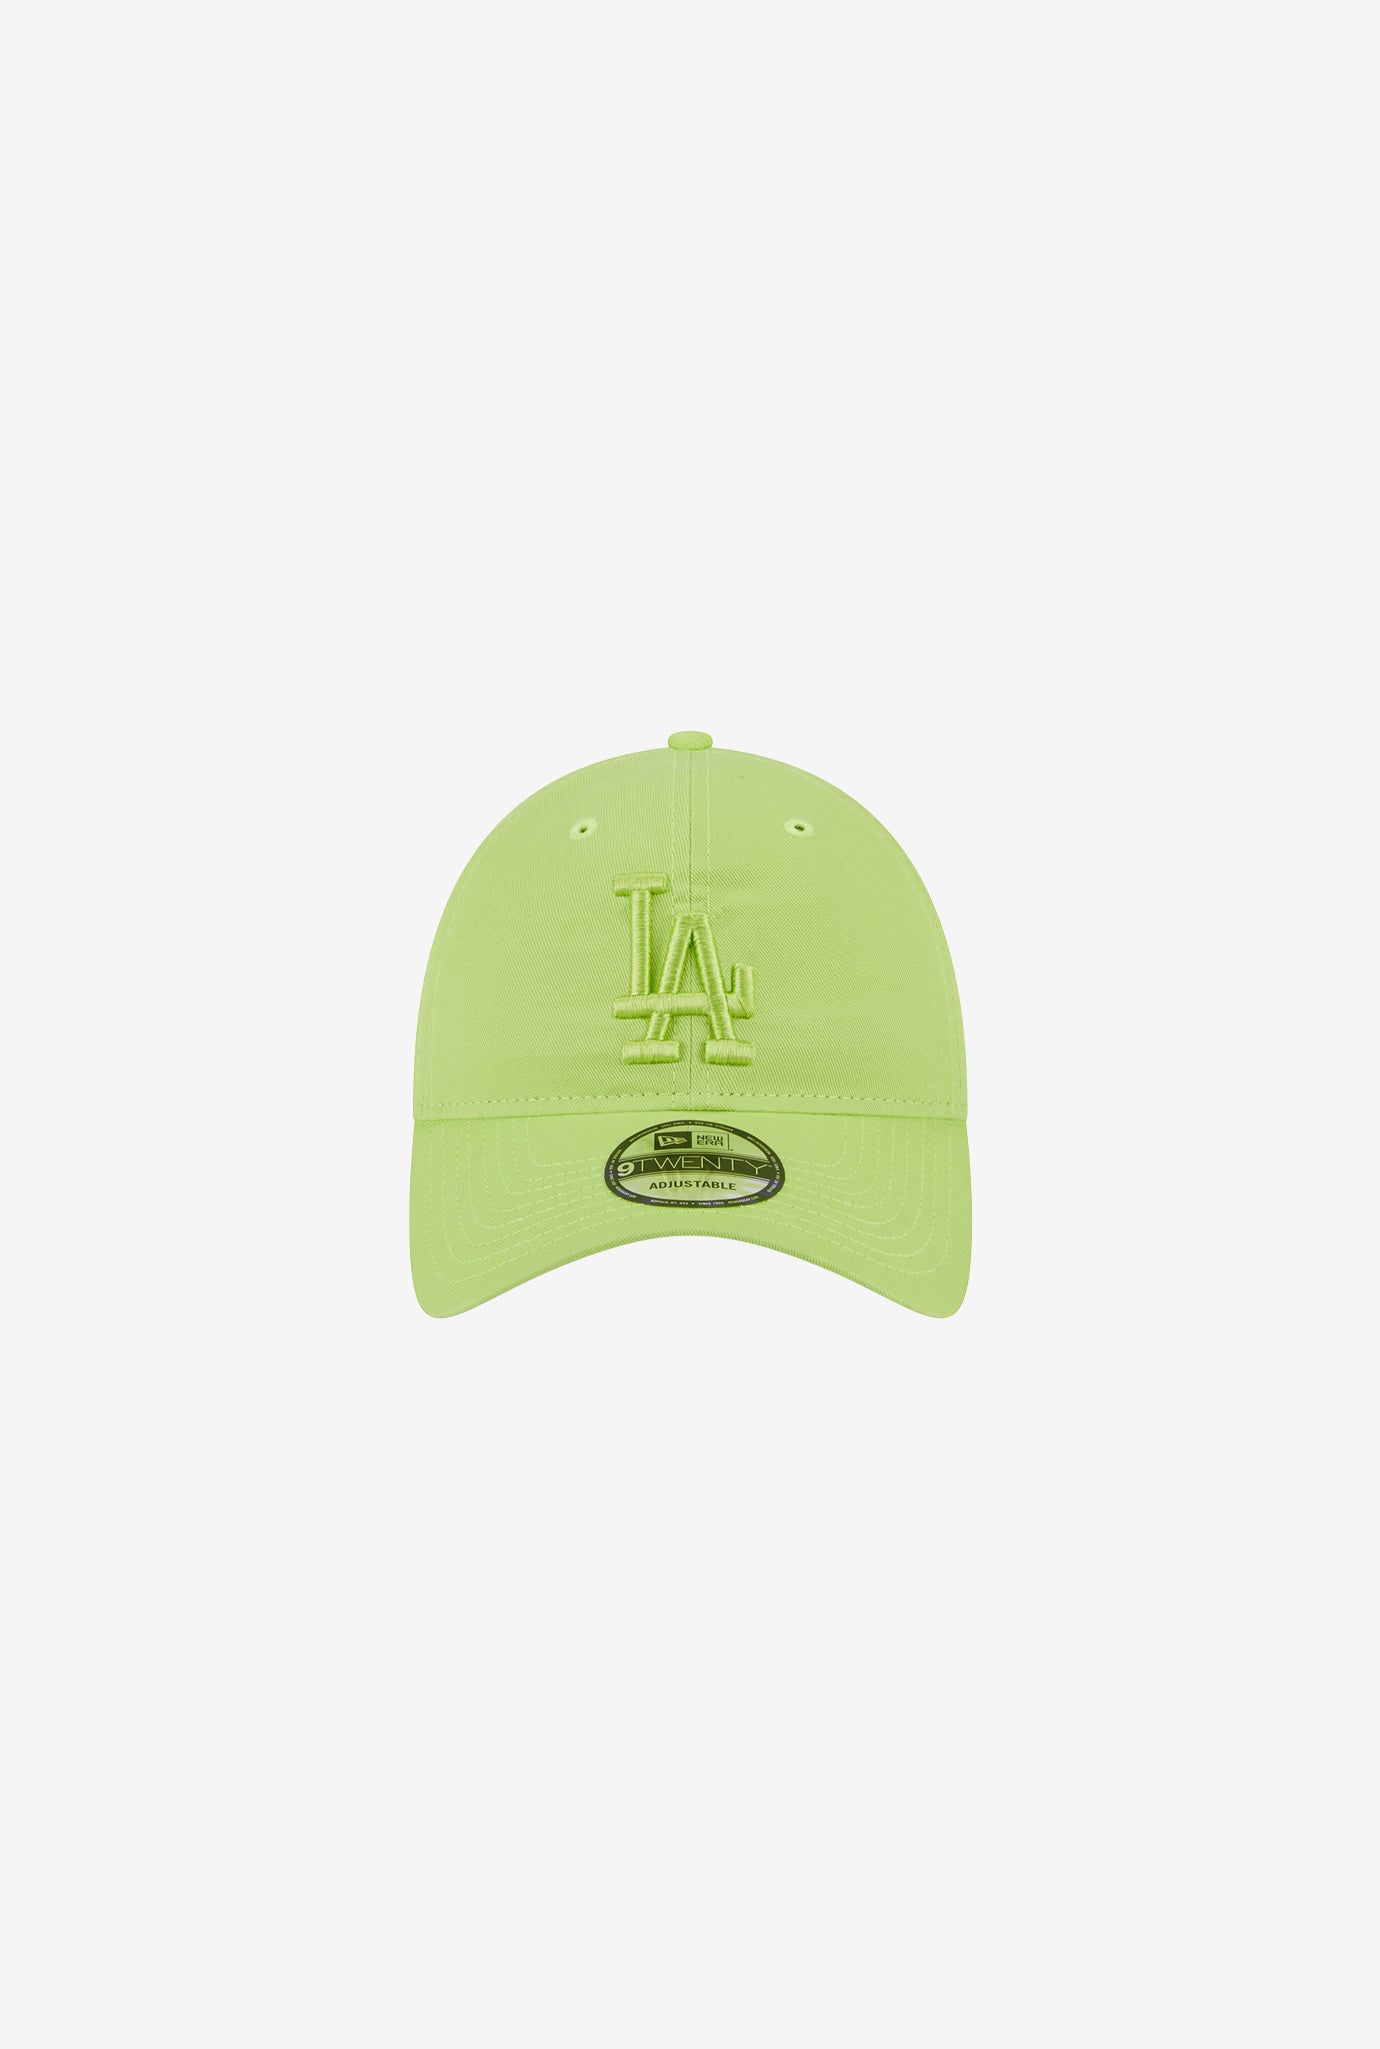 Los Angeles Dodgers 9TWENTY Color Pack - Neon Green